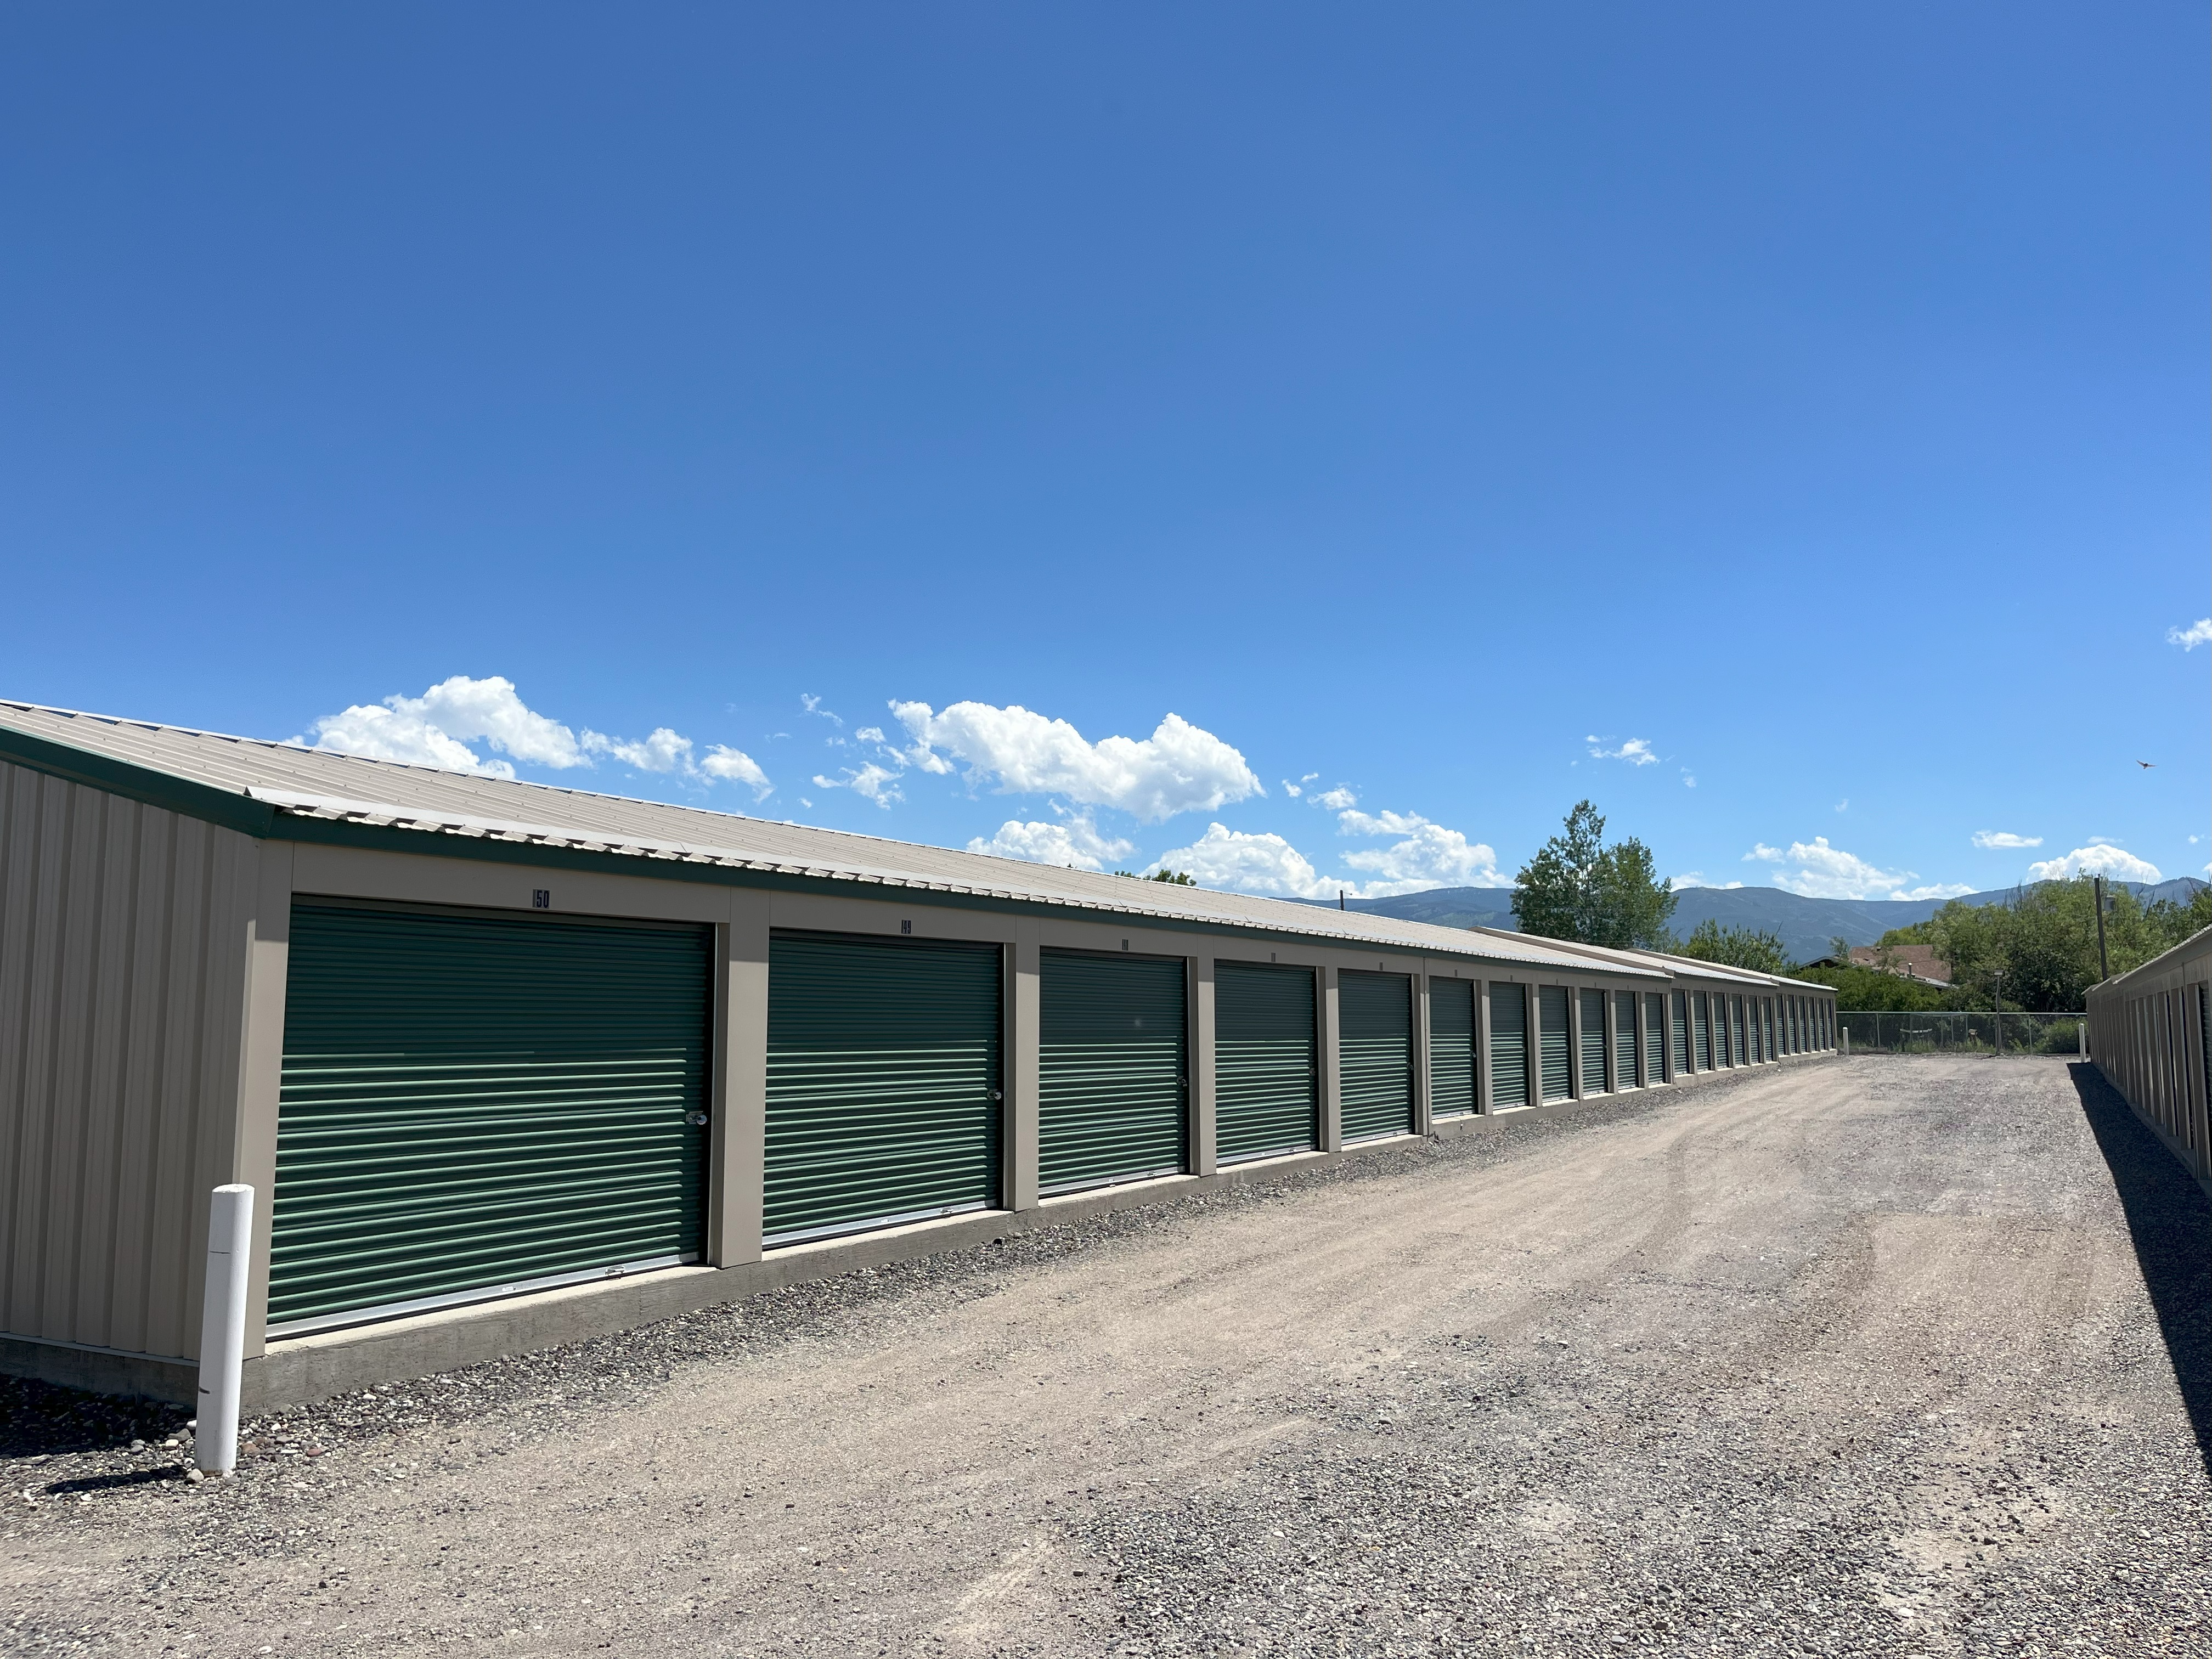 Long row of storage units - tan buildings, green doors at Alpine Storage MT